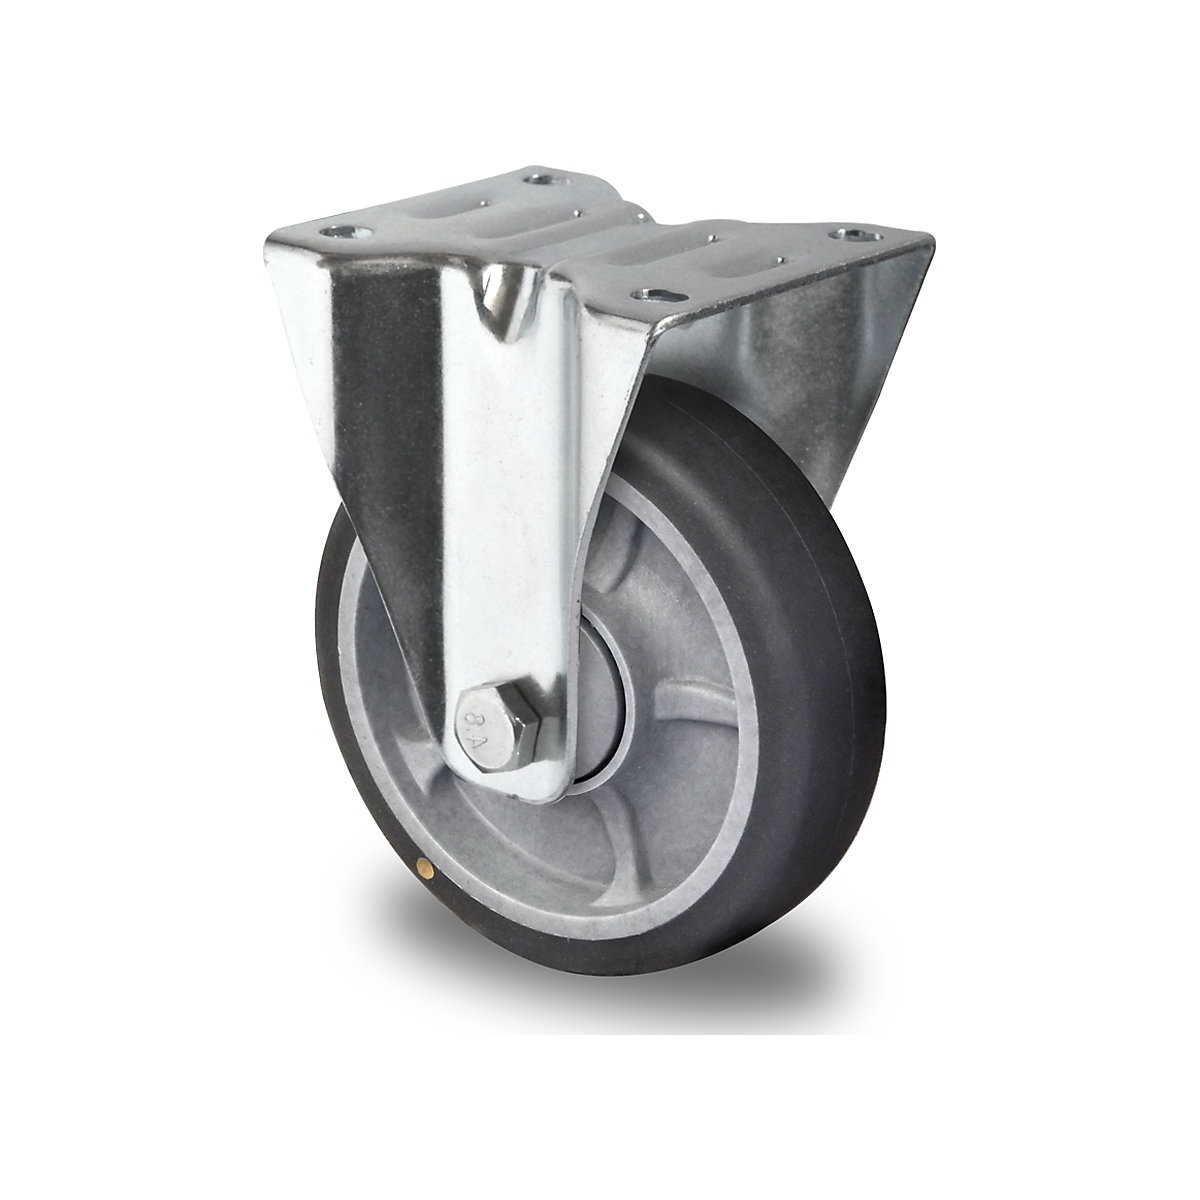 EUROKRAFTbasic – TPE tyres on PP rim, ESD, 2+ items, wheel Ø x width 125 x 35 mm, fixed castor